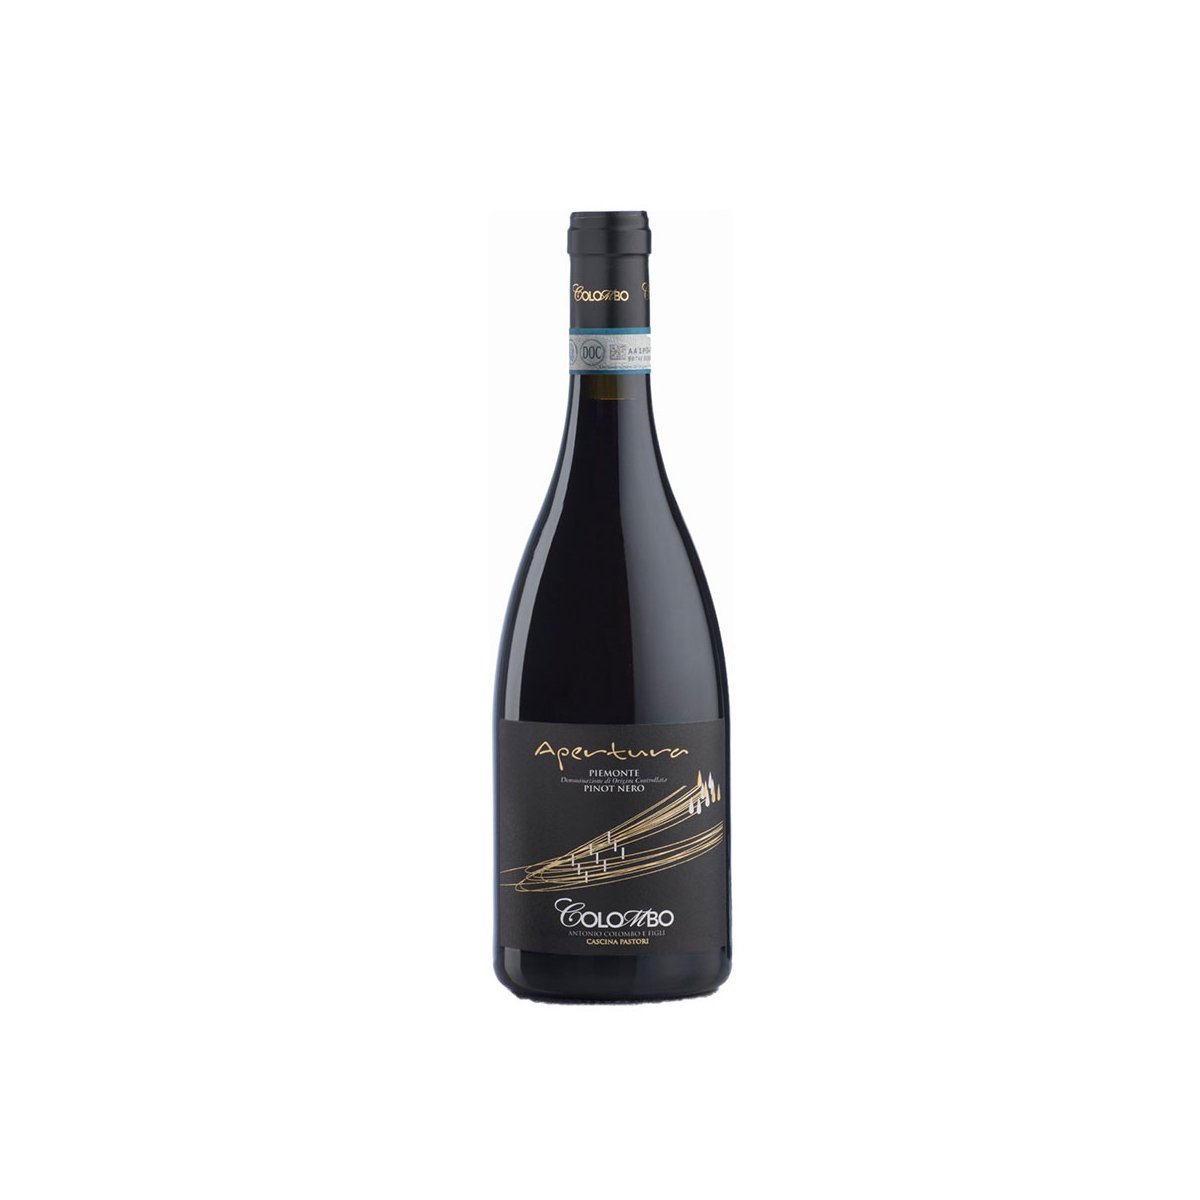 Apertura Pinot nero 2013 magnum  Colombo Cascina Pastori - Piemonte